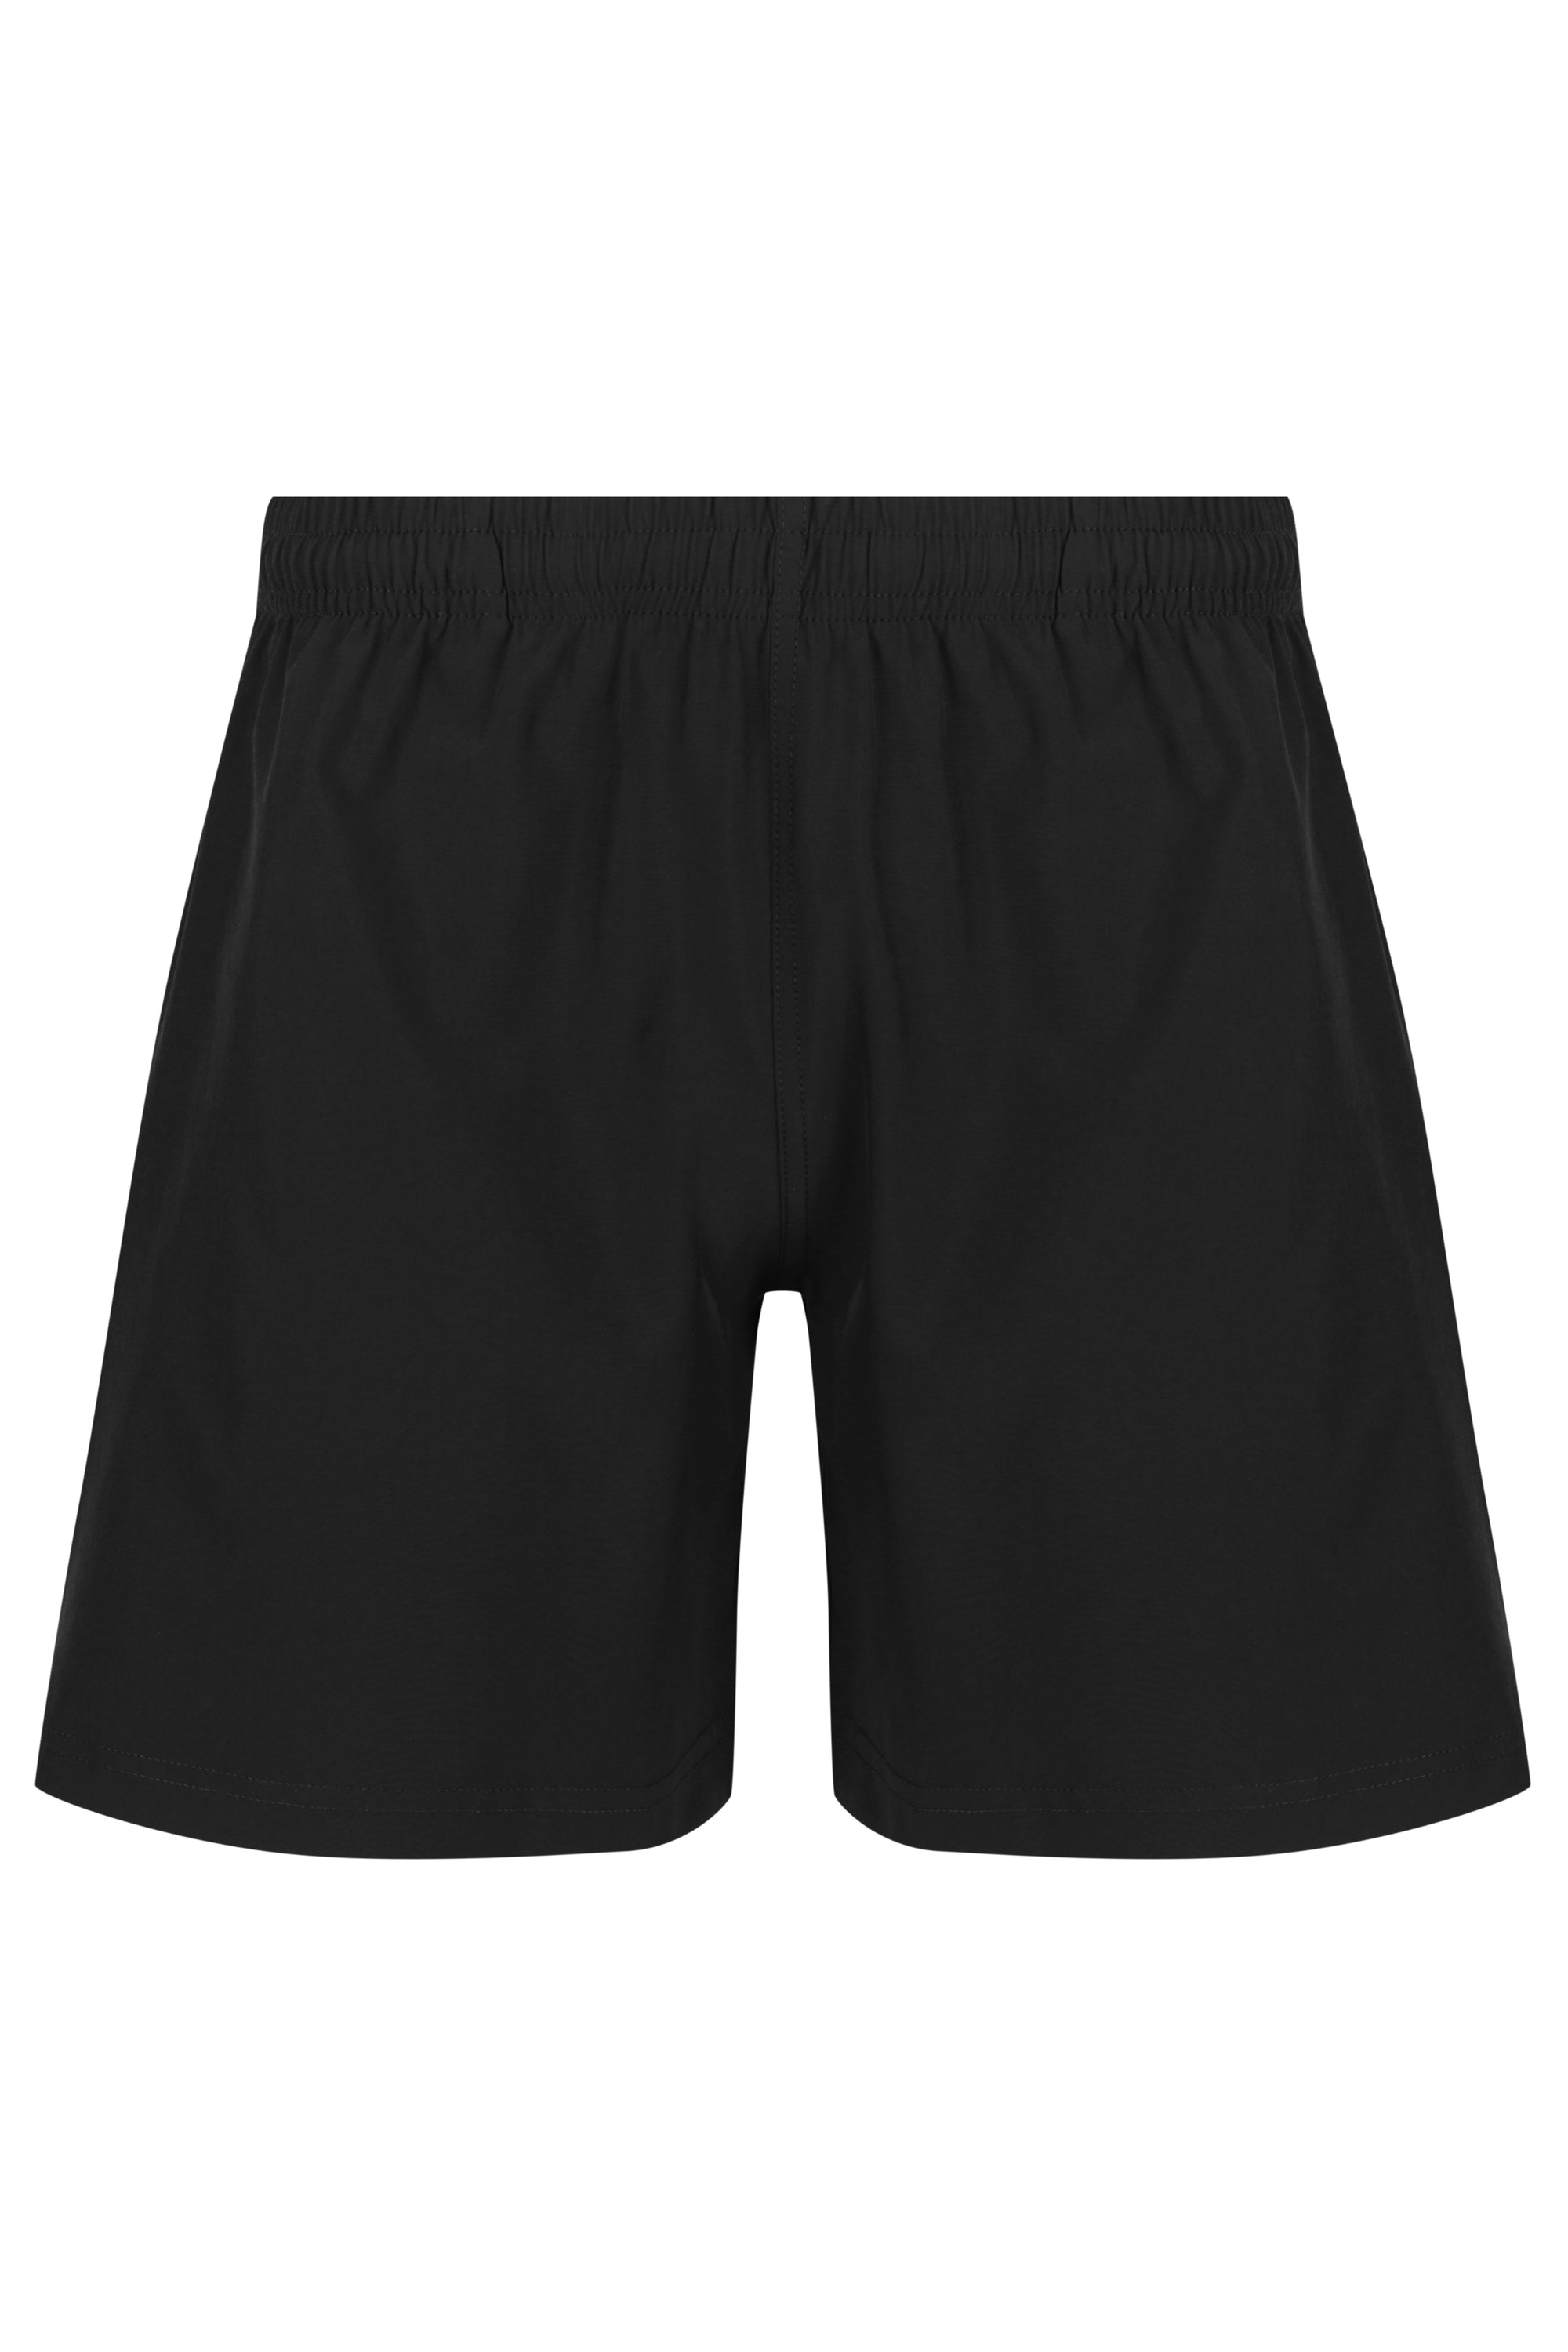 Kids School Shorts - Black